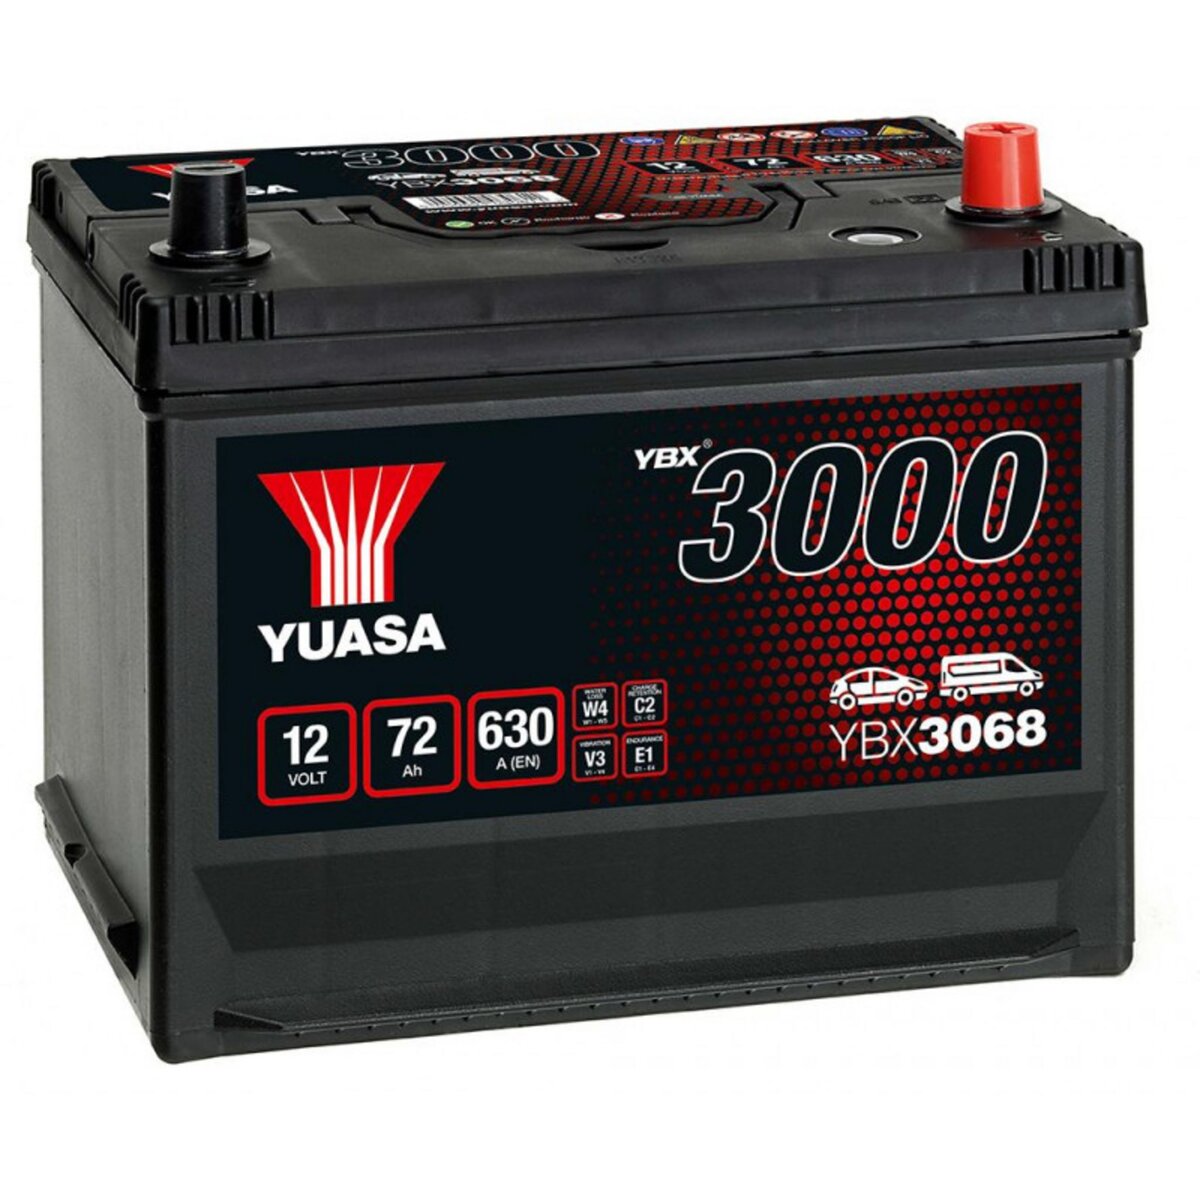 YUASA Batterie Yuasa SMF YBX3068 12V 72ah 630A